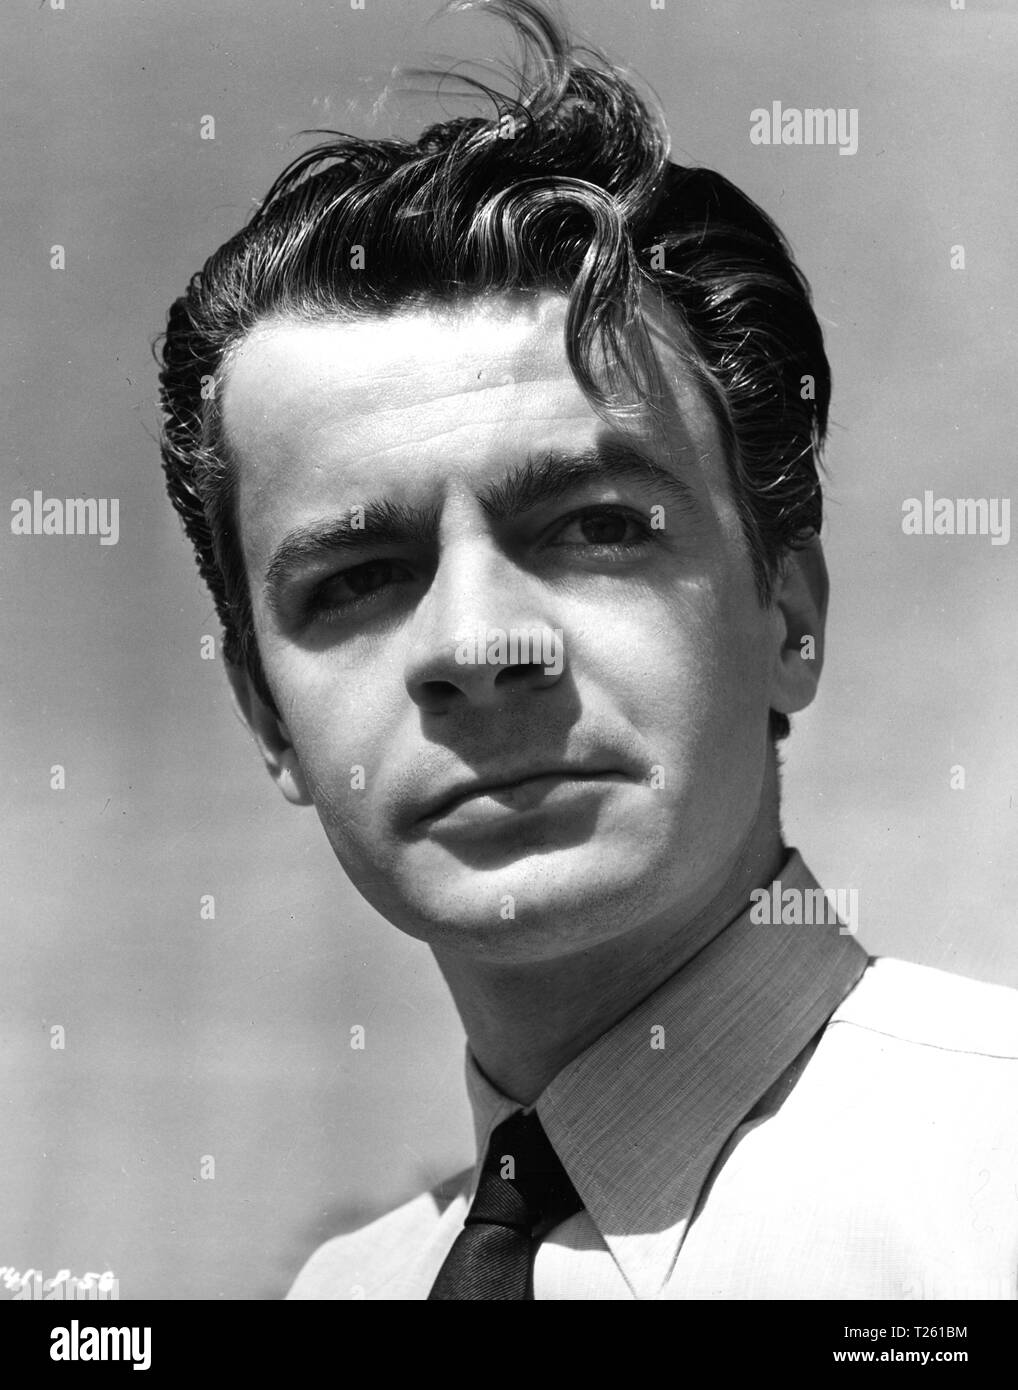 Serge reggiani Black and White Stock Photos & Images - Alamy